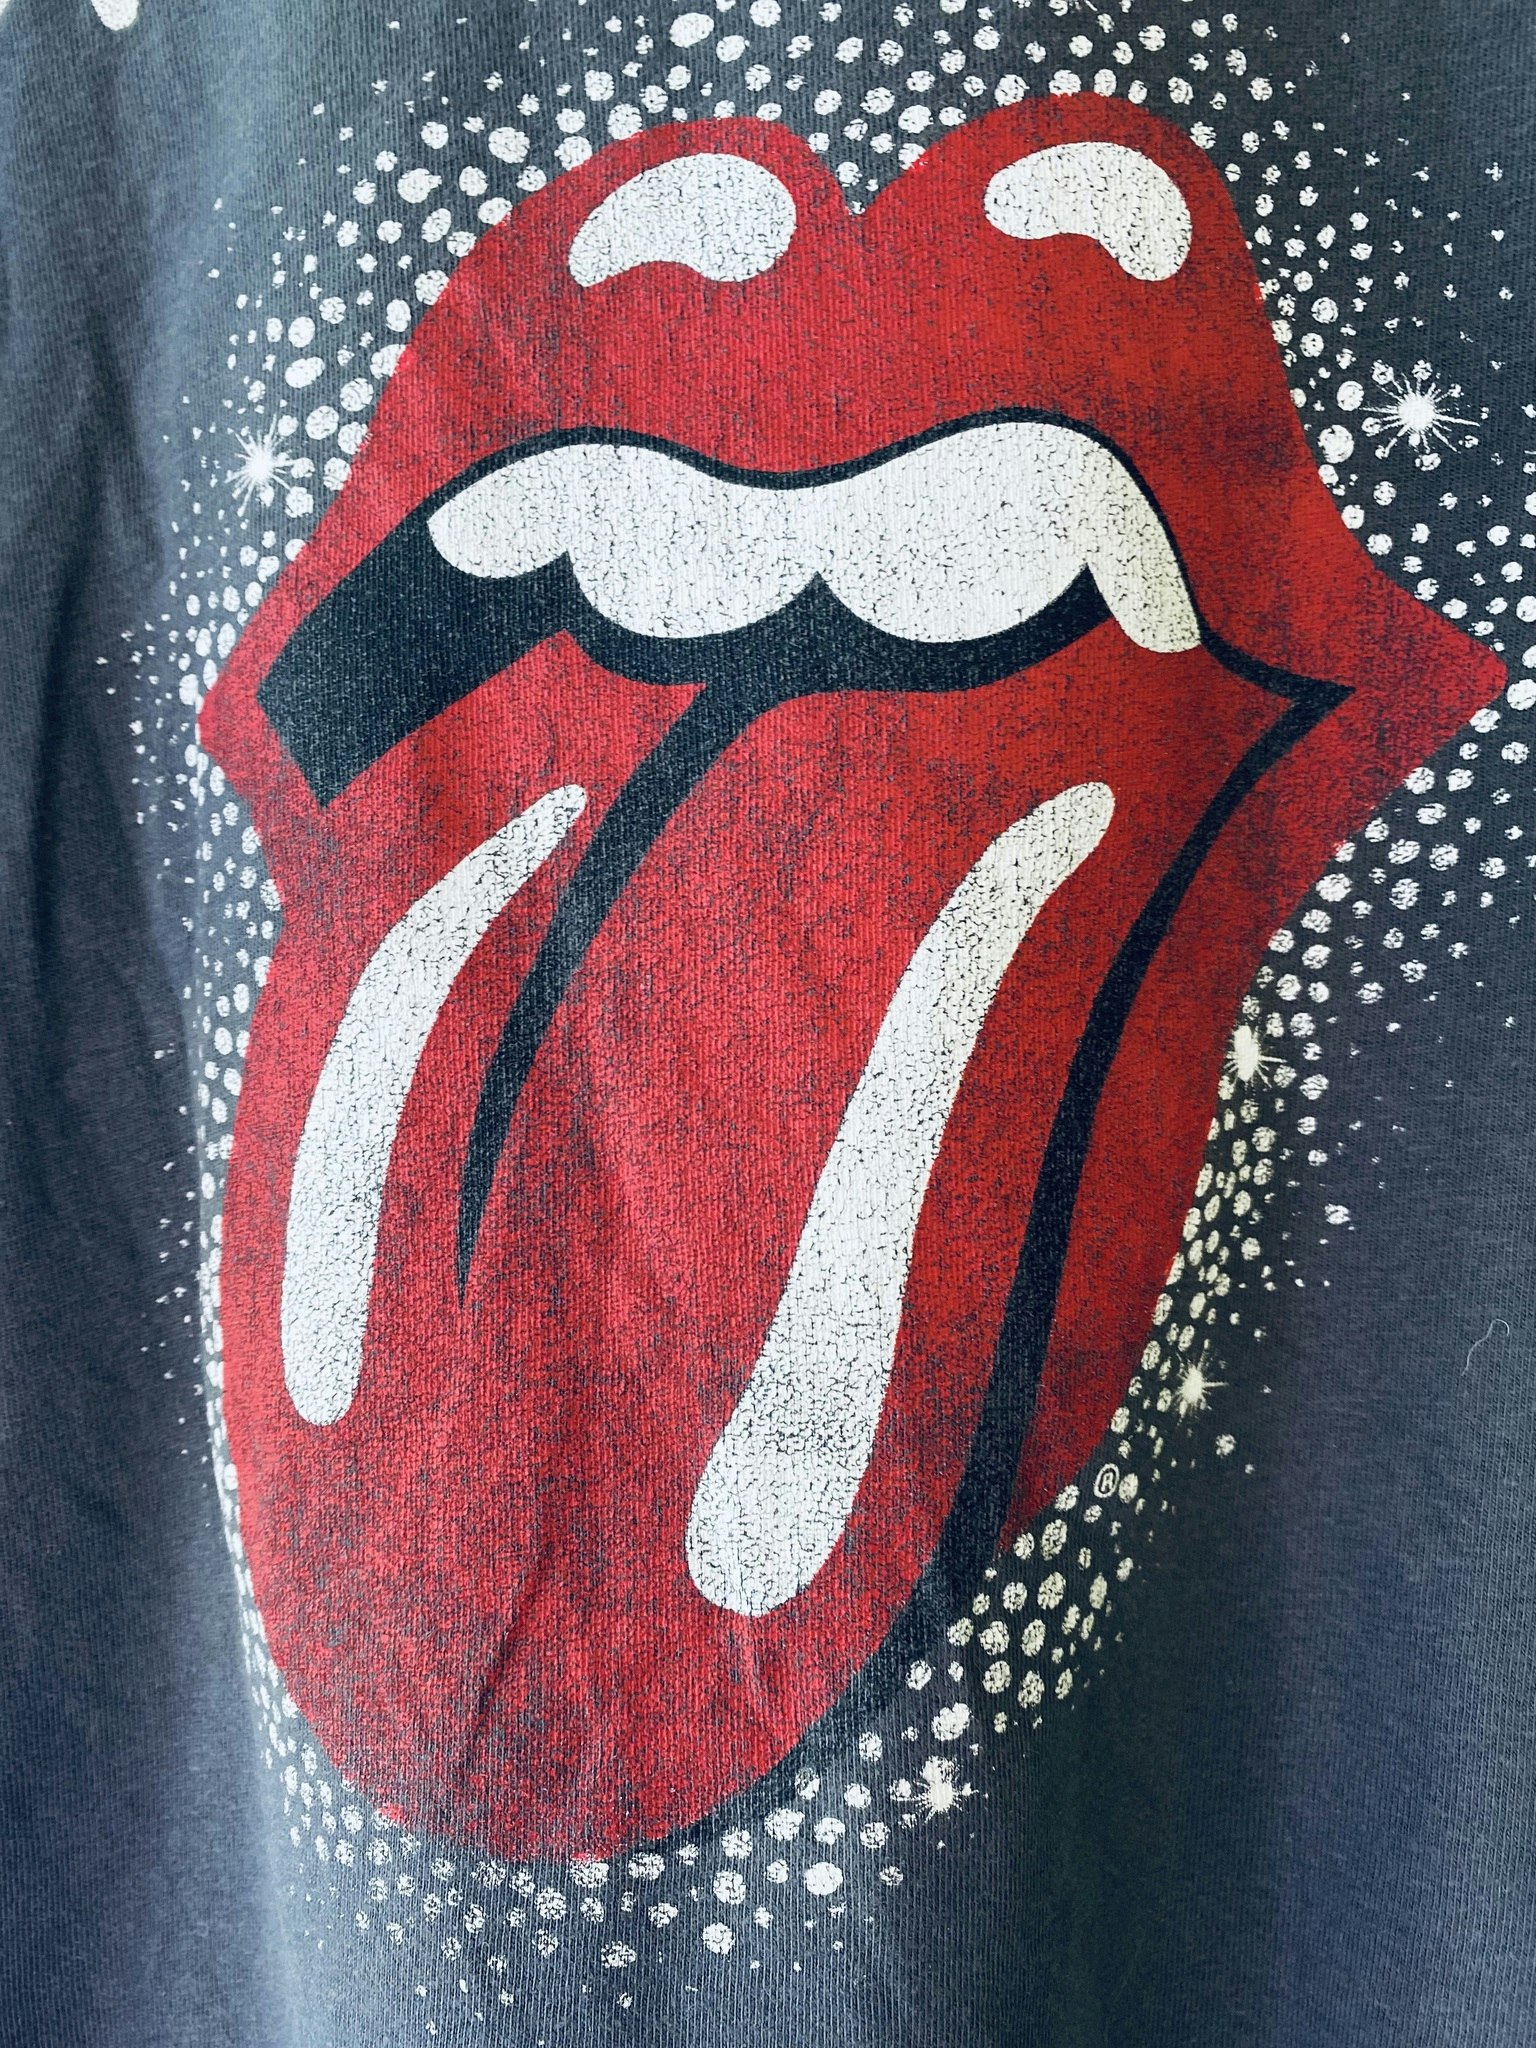 Tisha Rolling Stones